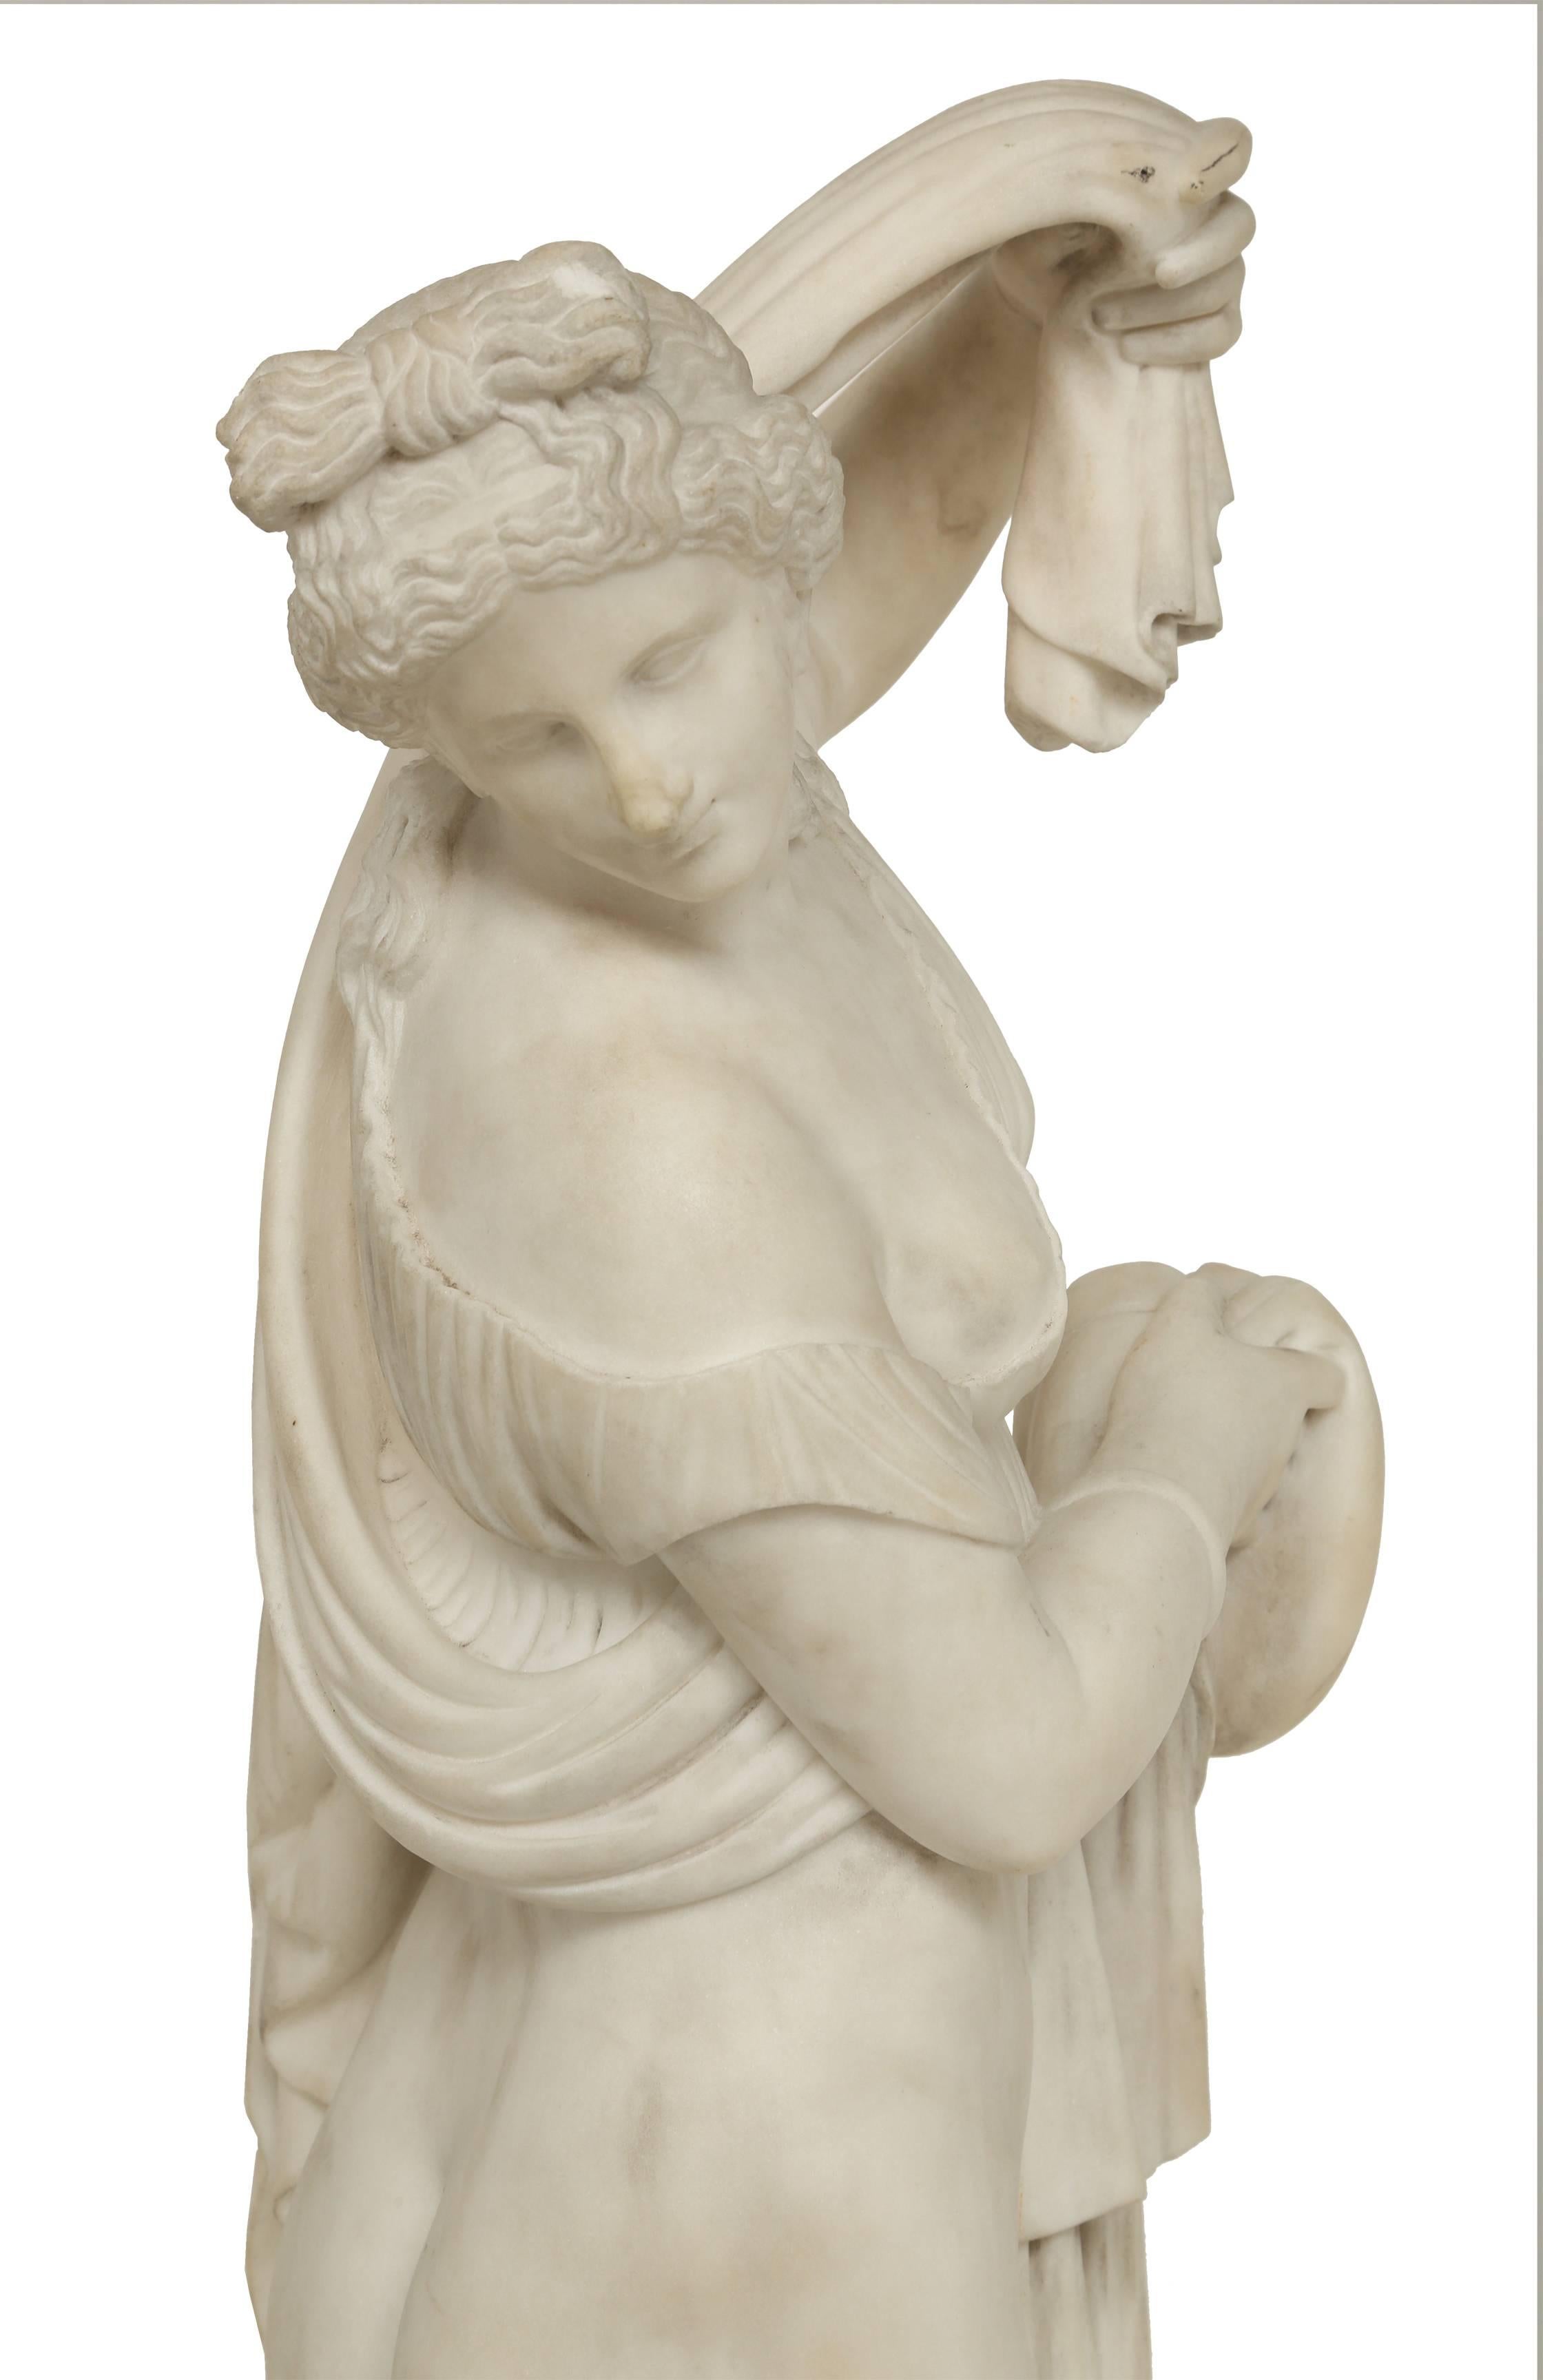 19th Century White Carrara Marble Sculpture of Venus, Signed J VACCA NAPOLI 1809 2